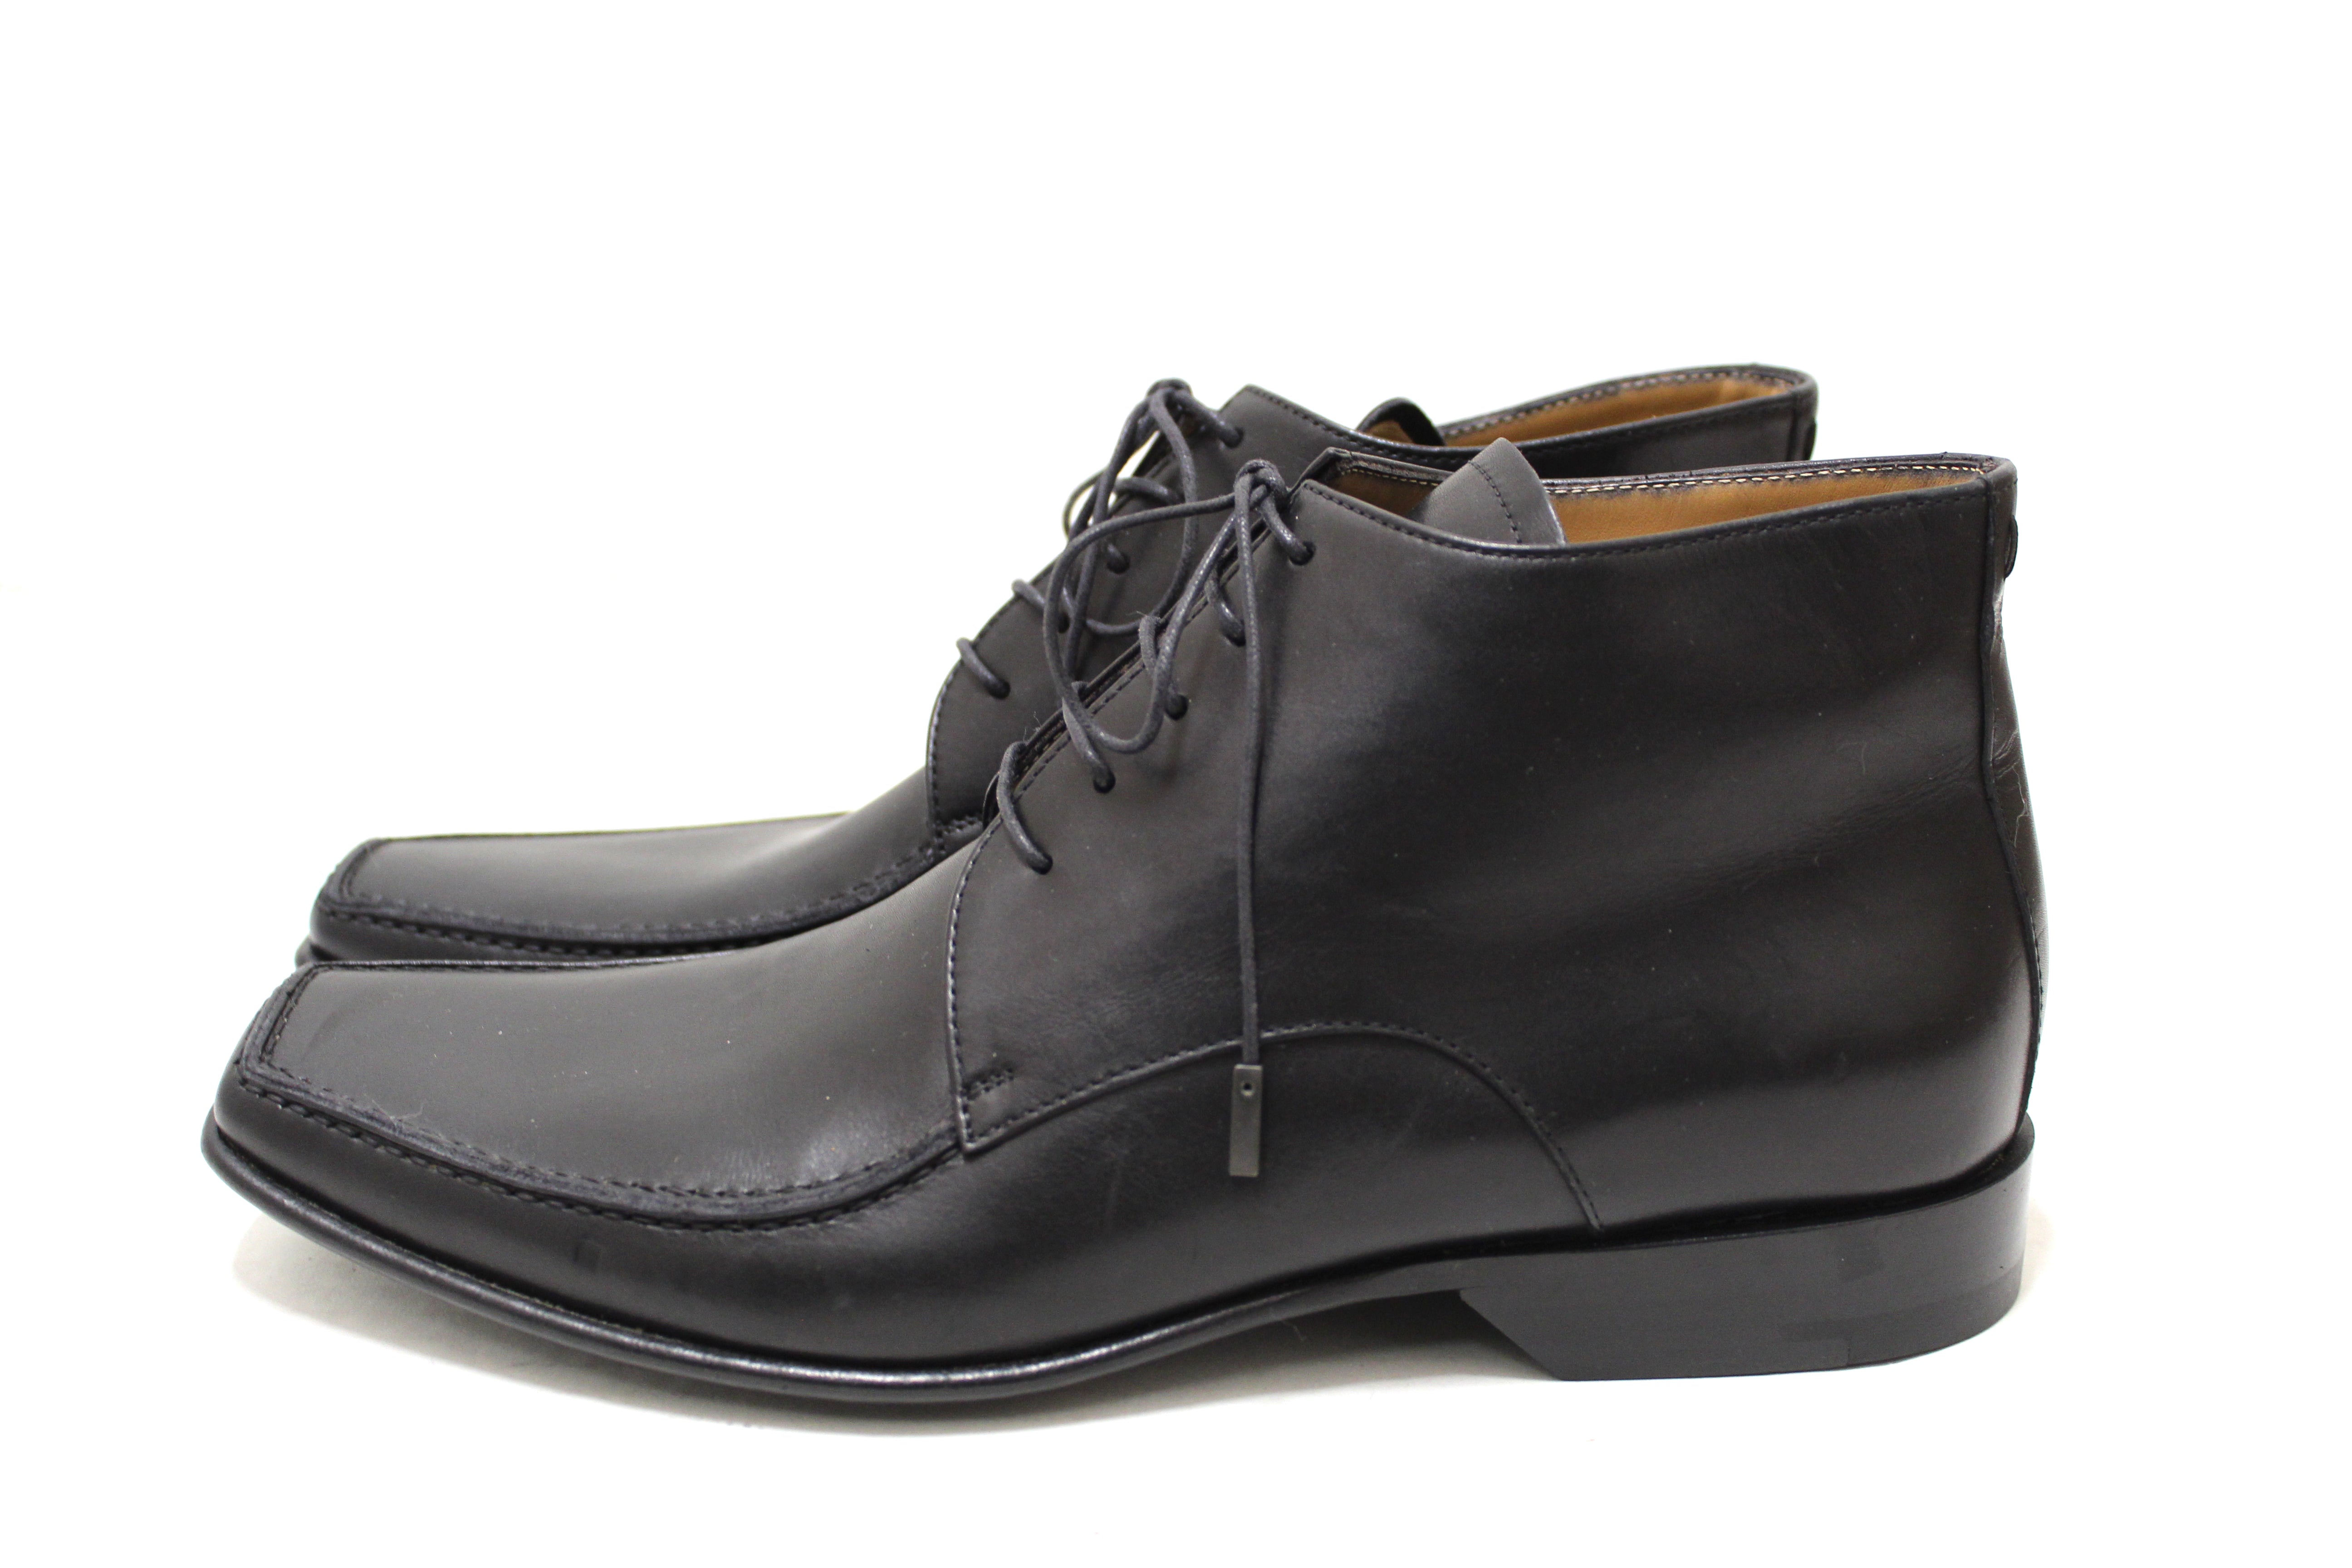 Leather formal shoes, Louis vuitton  shoes, Formal shoes for men